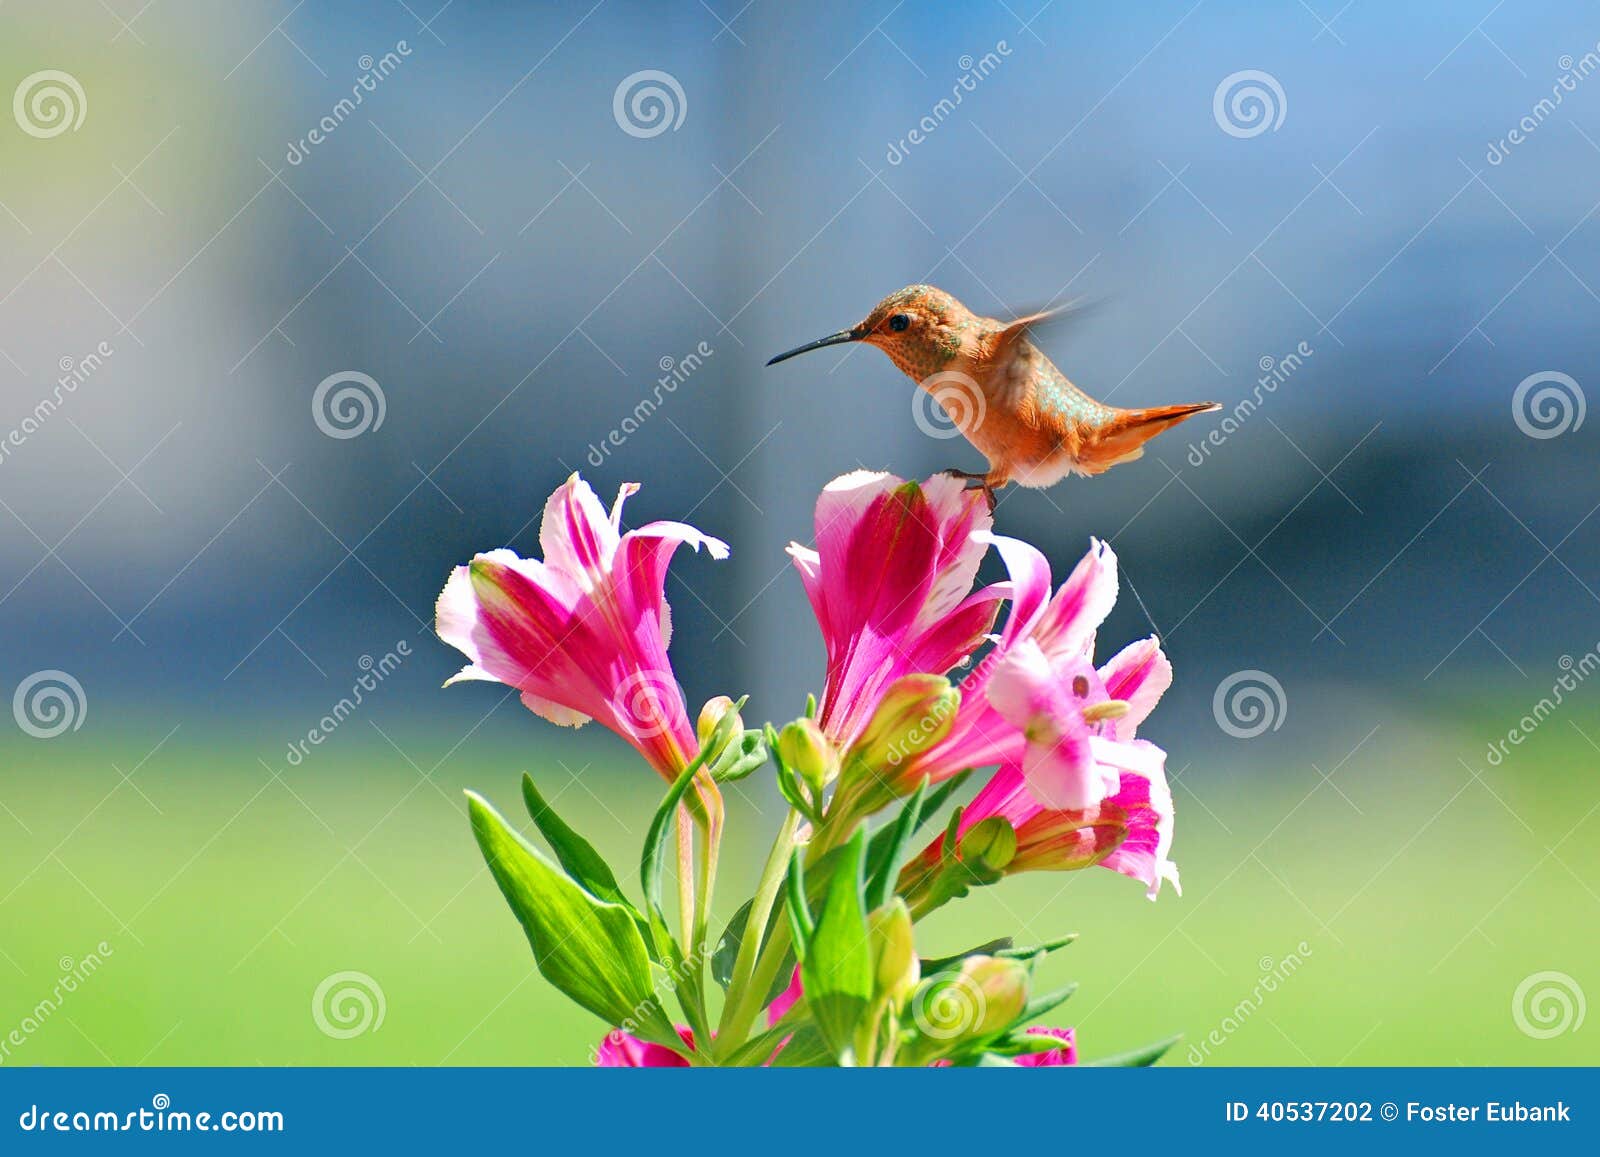 allens hummingbird hovering over flowers.